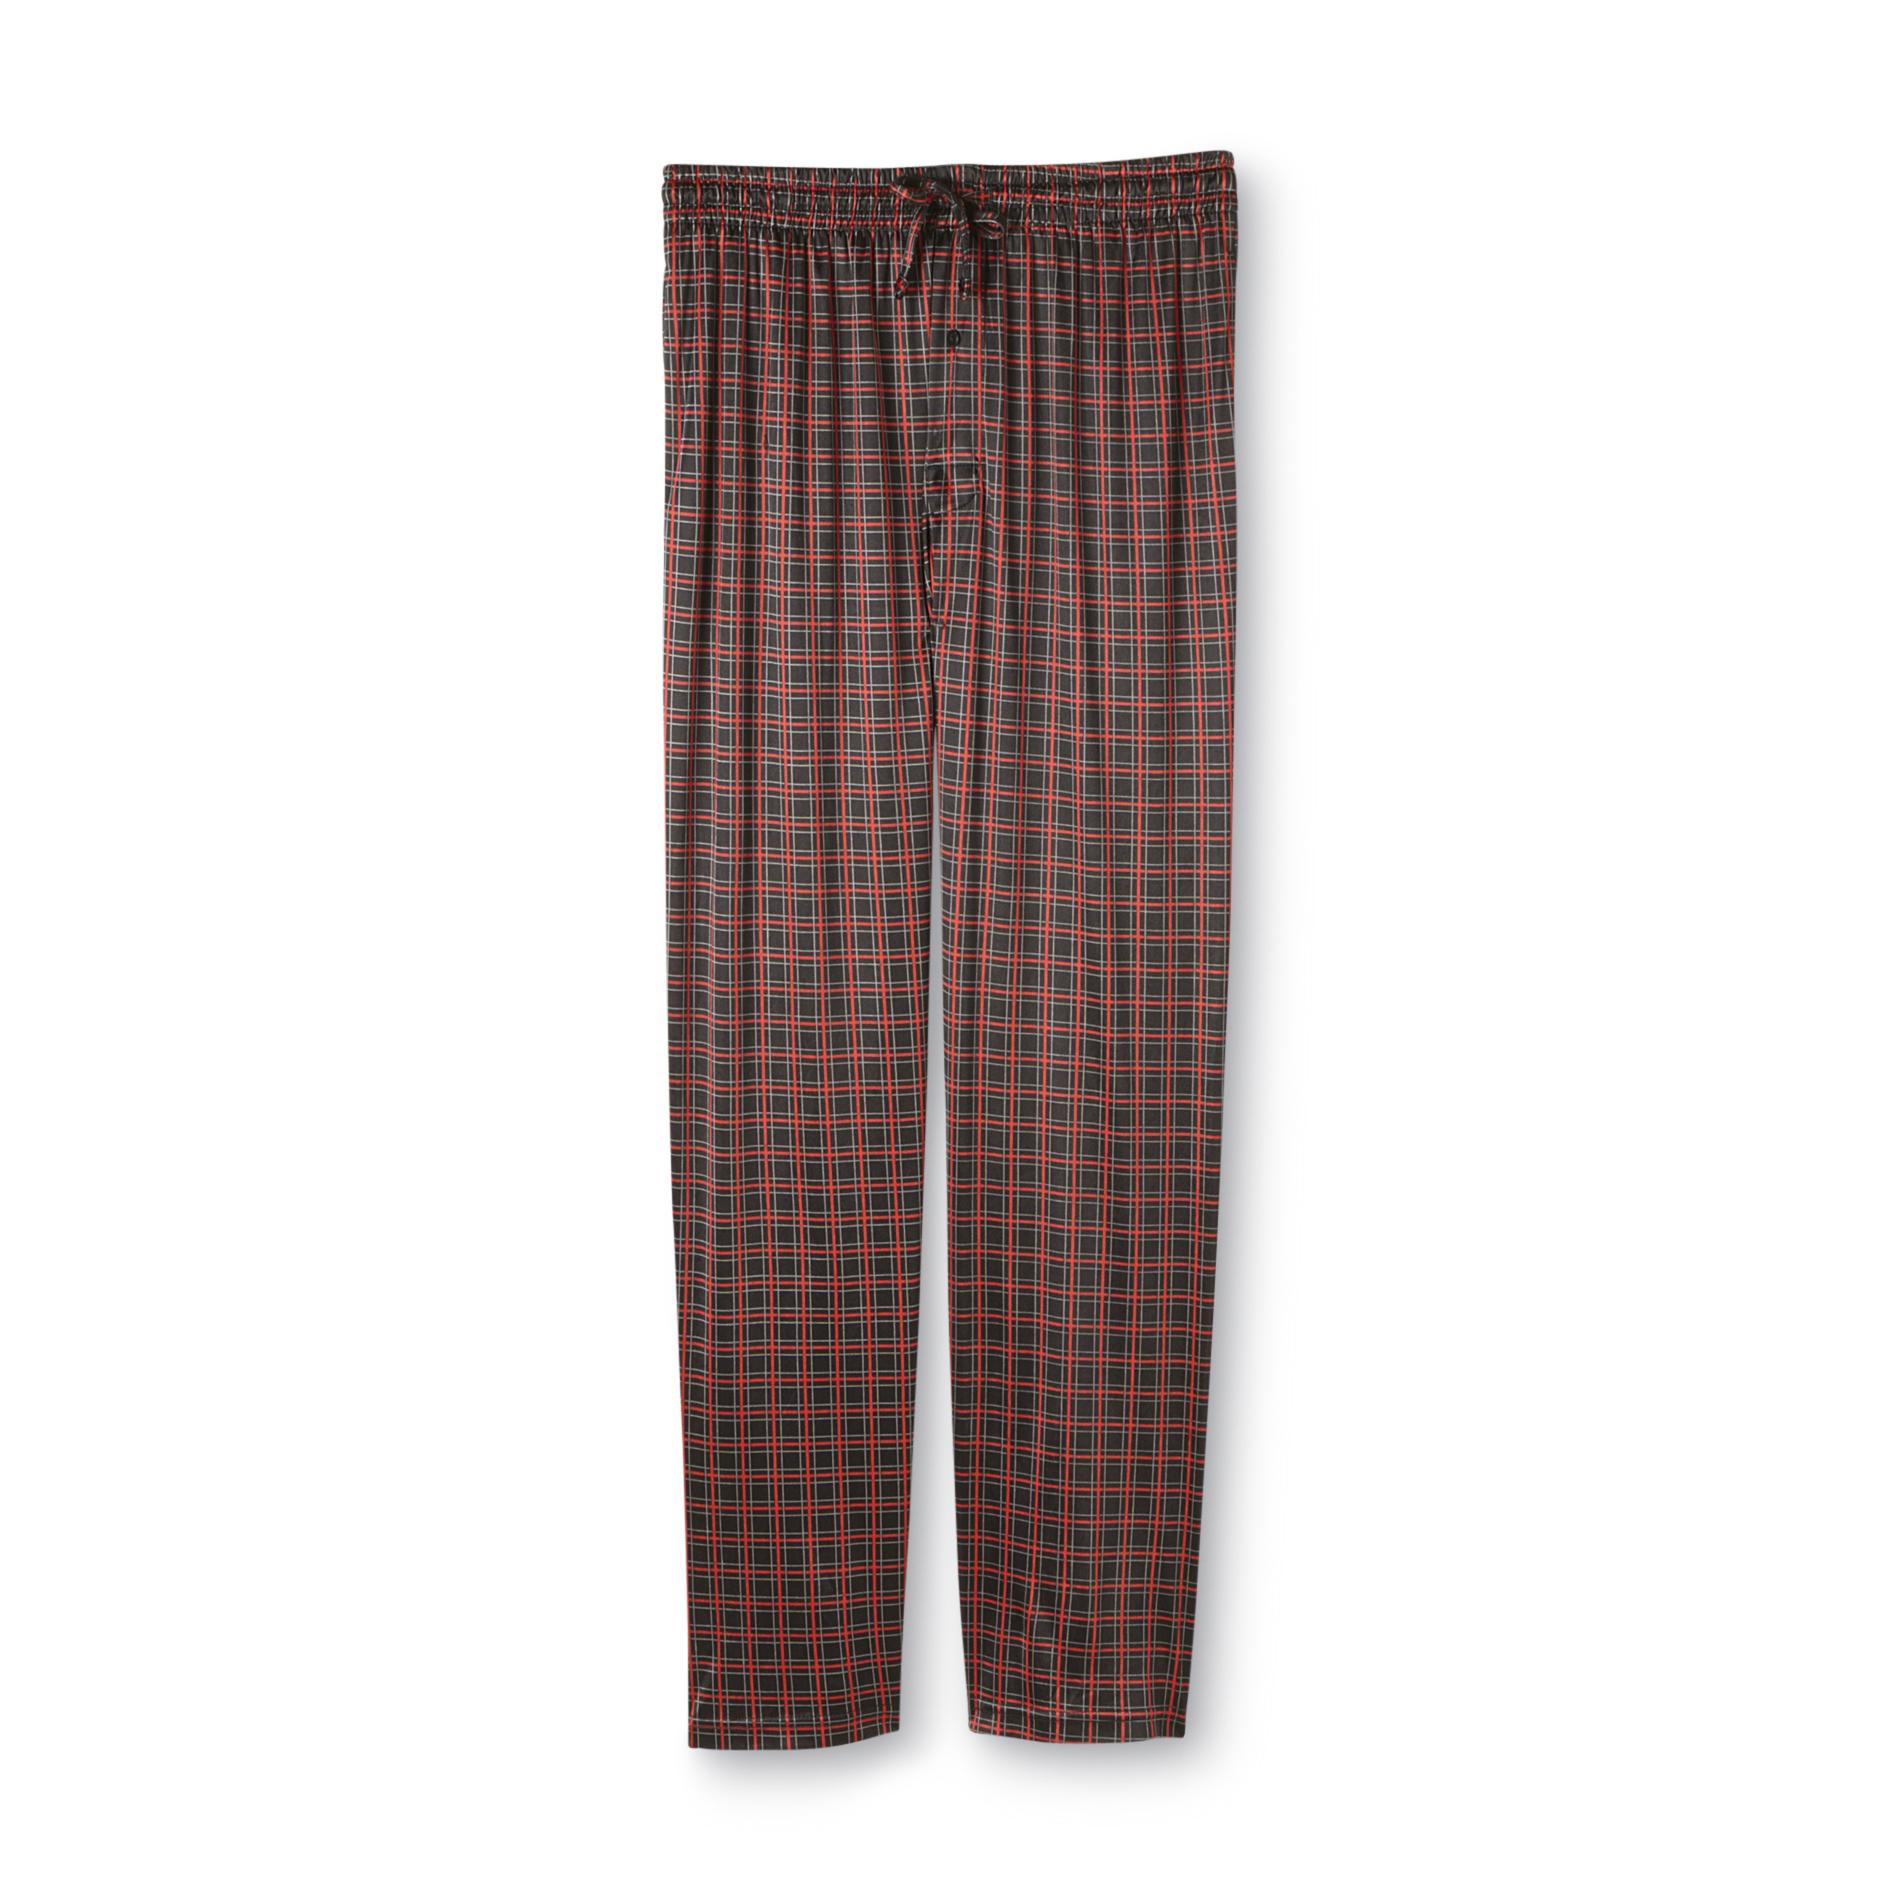 Covington Men's Satin Pajama Pants - Windowpane